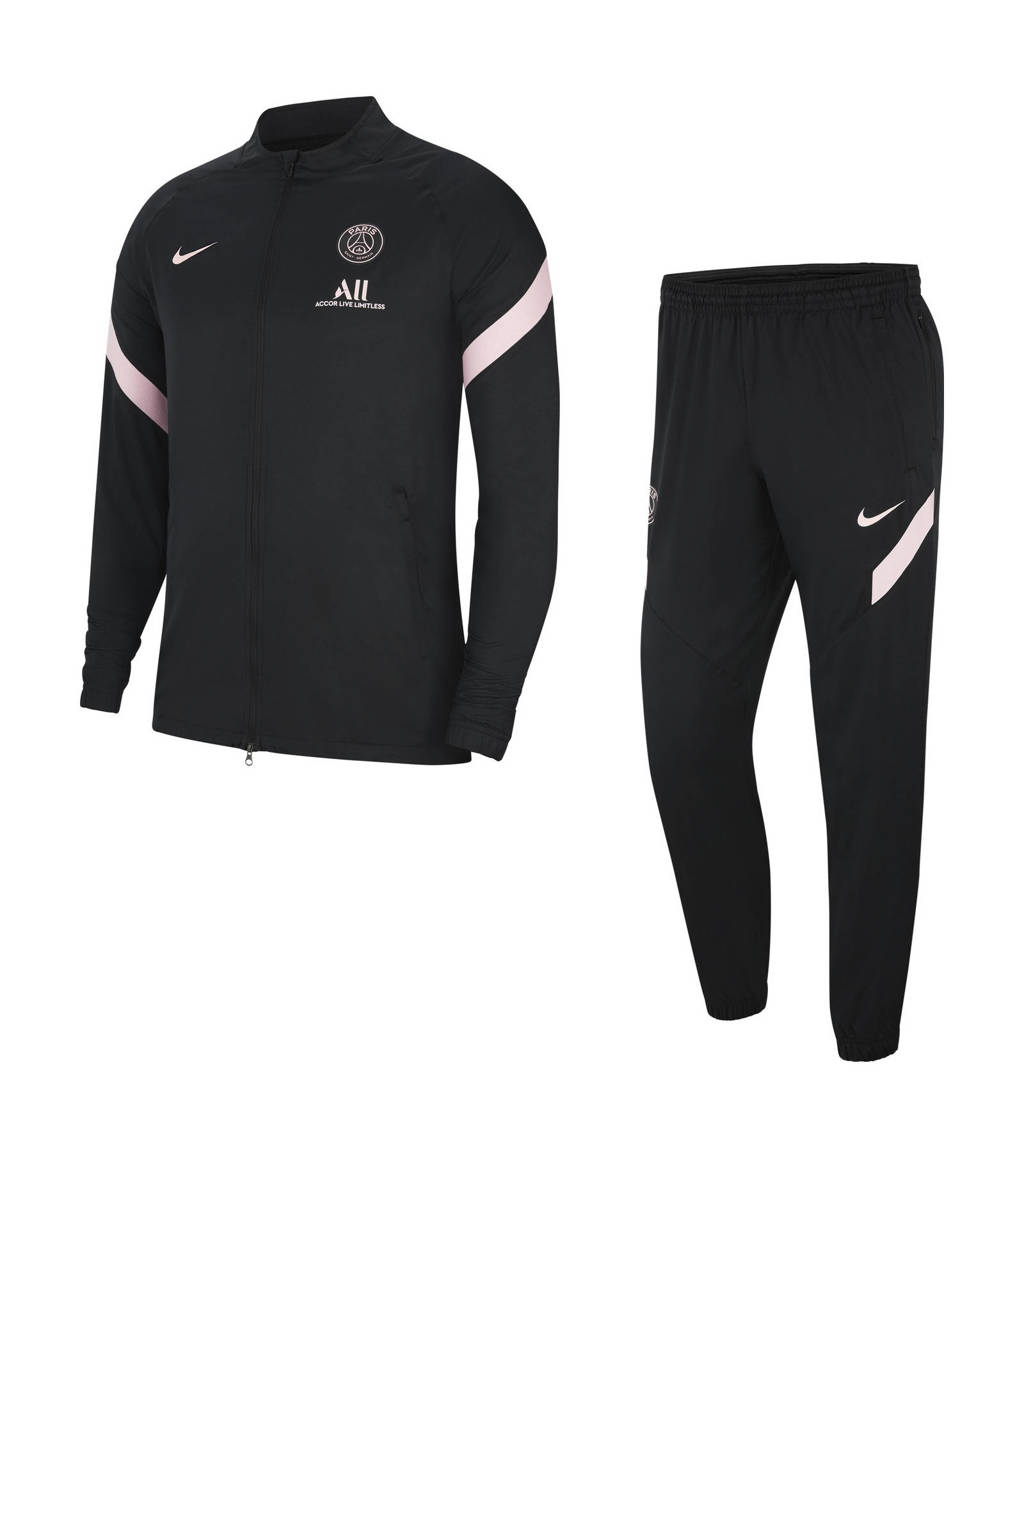 Nike Senior Paris Saint Germain trainingspak zwart/lichtroze, Zwart/lichtroze